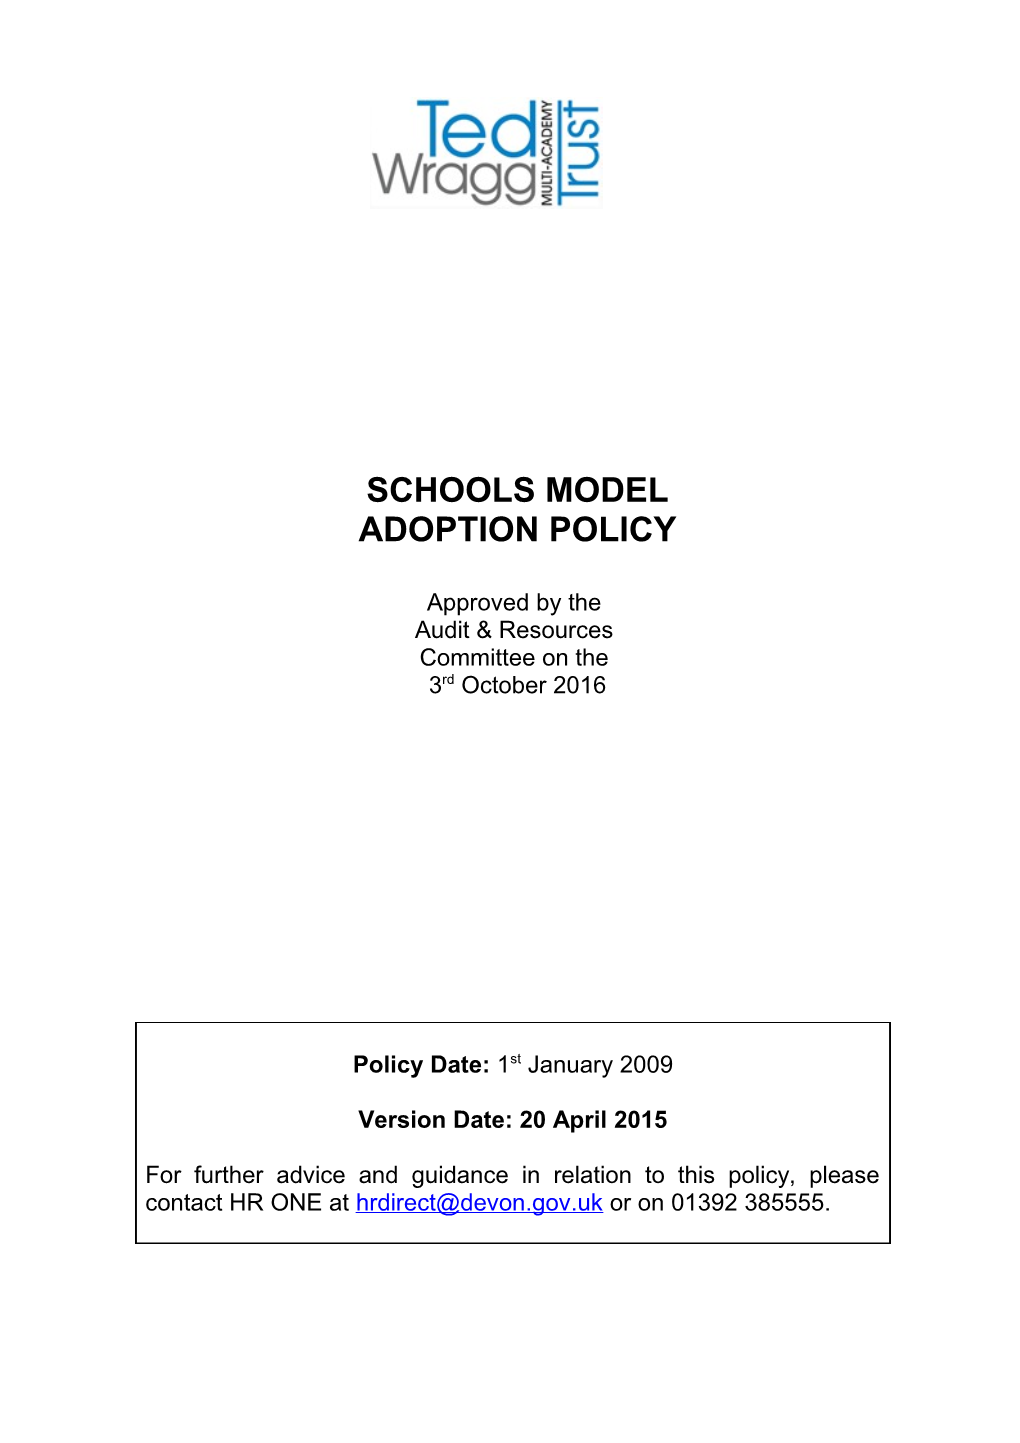 Schools Model